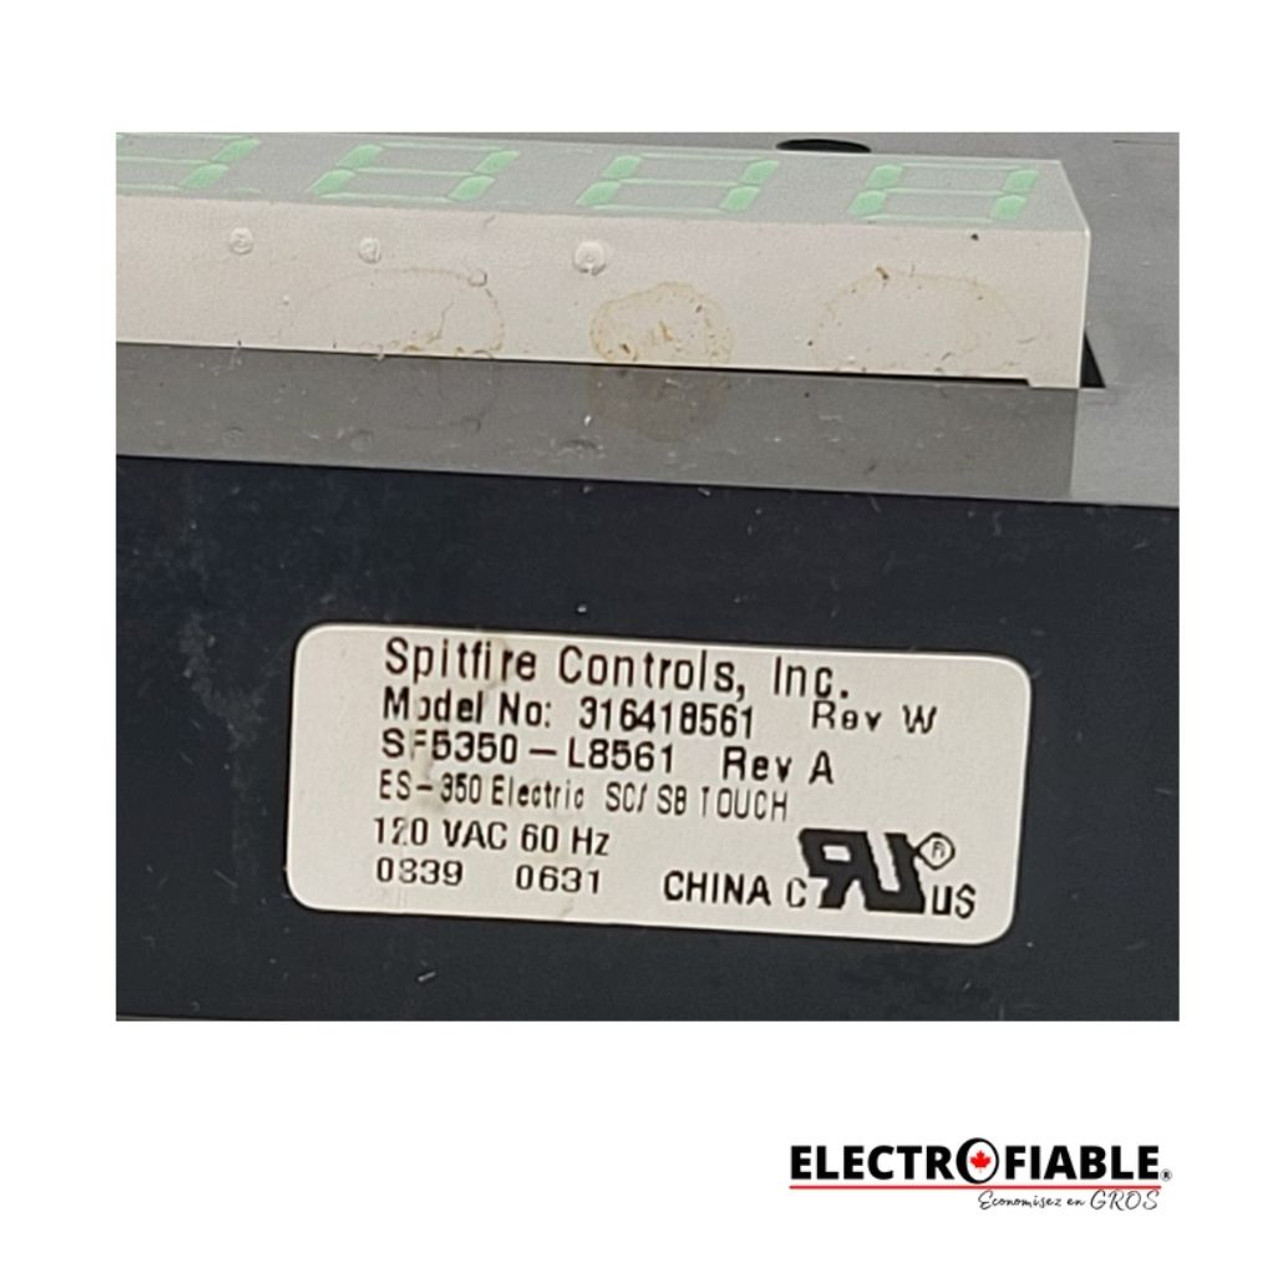 Frigidaire, 316418561, Control panel fit stove